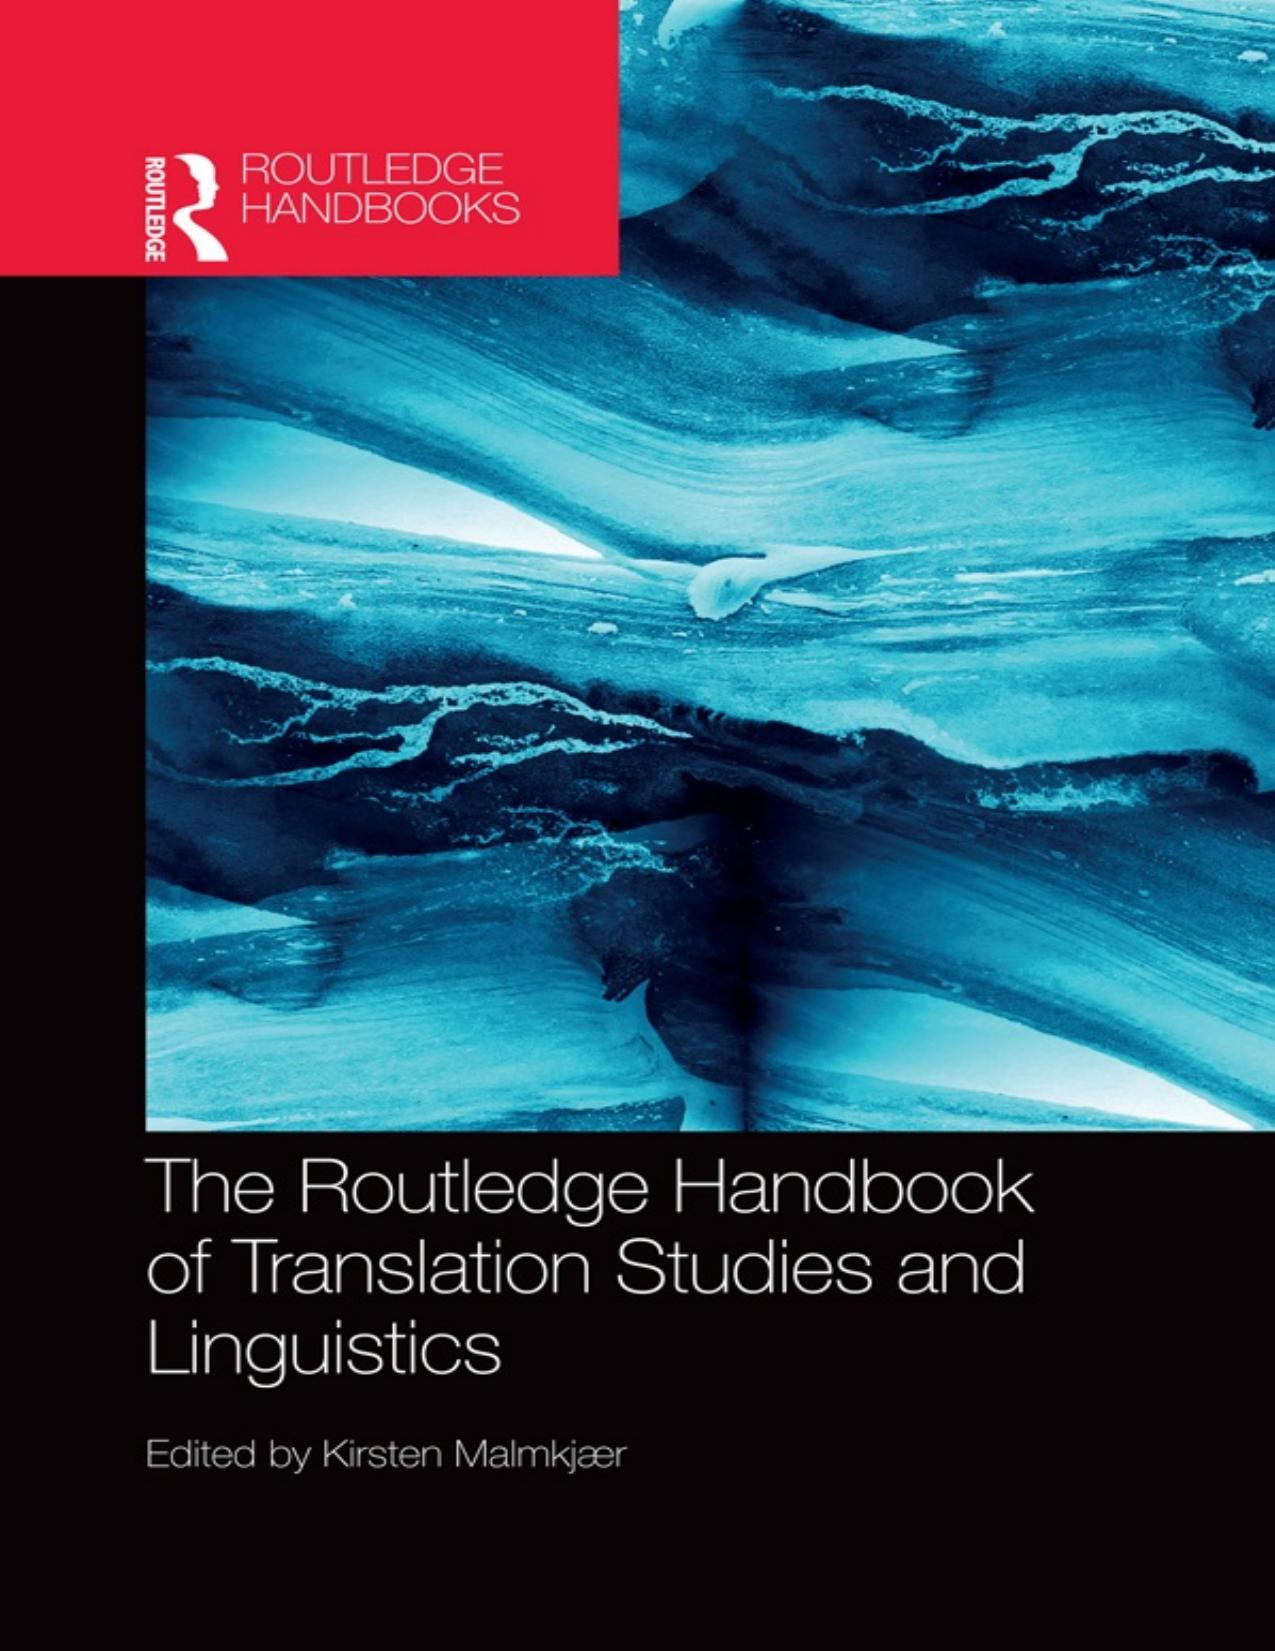 The Routledge handbook of translation studies and linguistics - PDFDrive.com